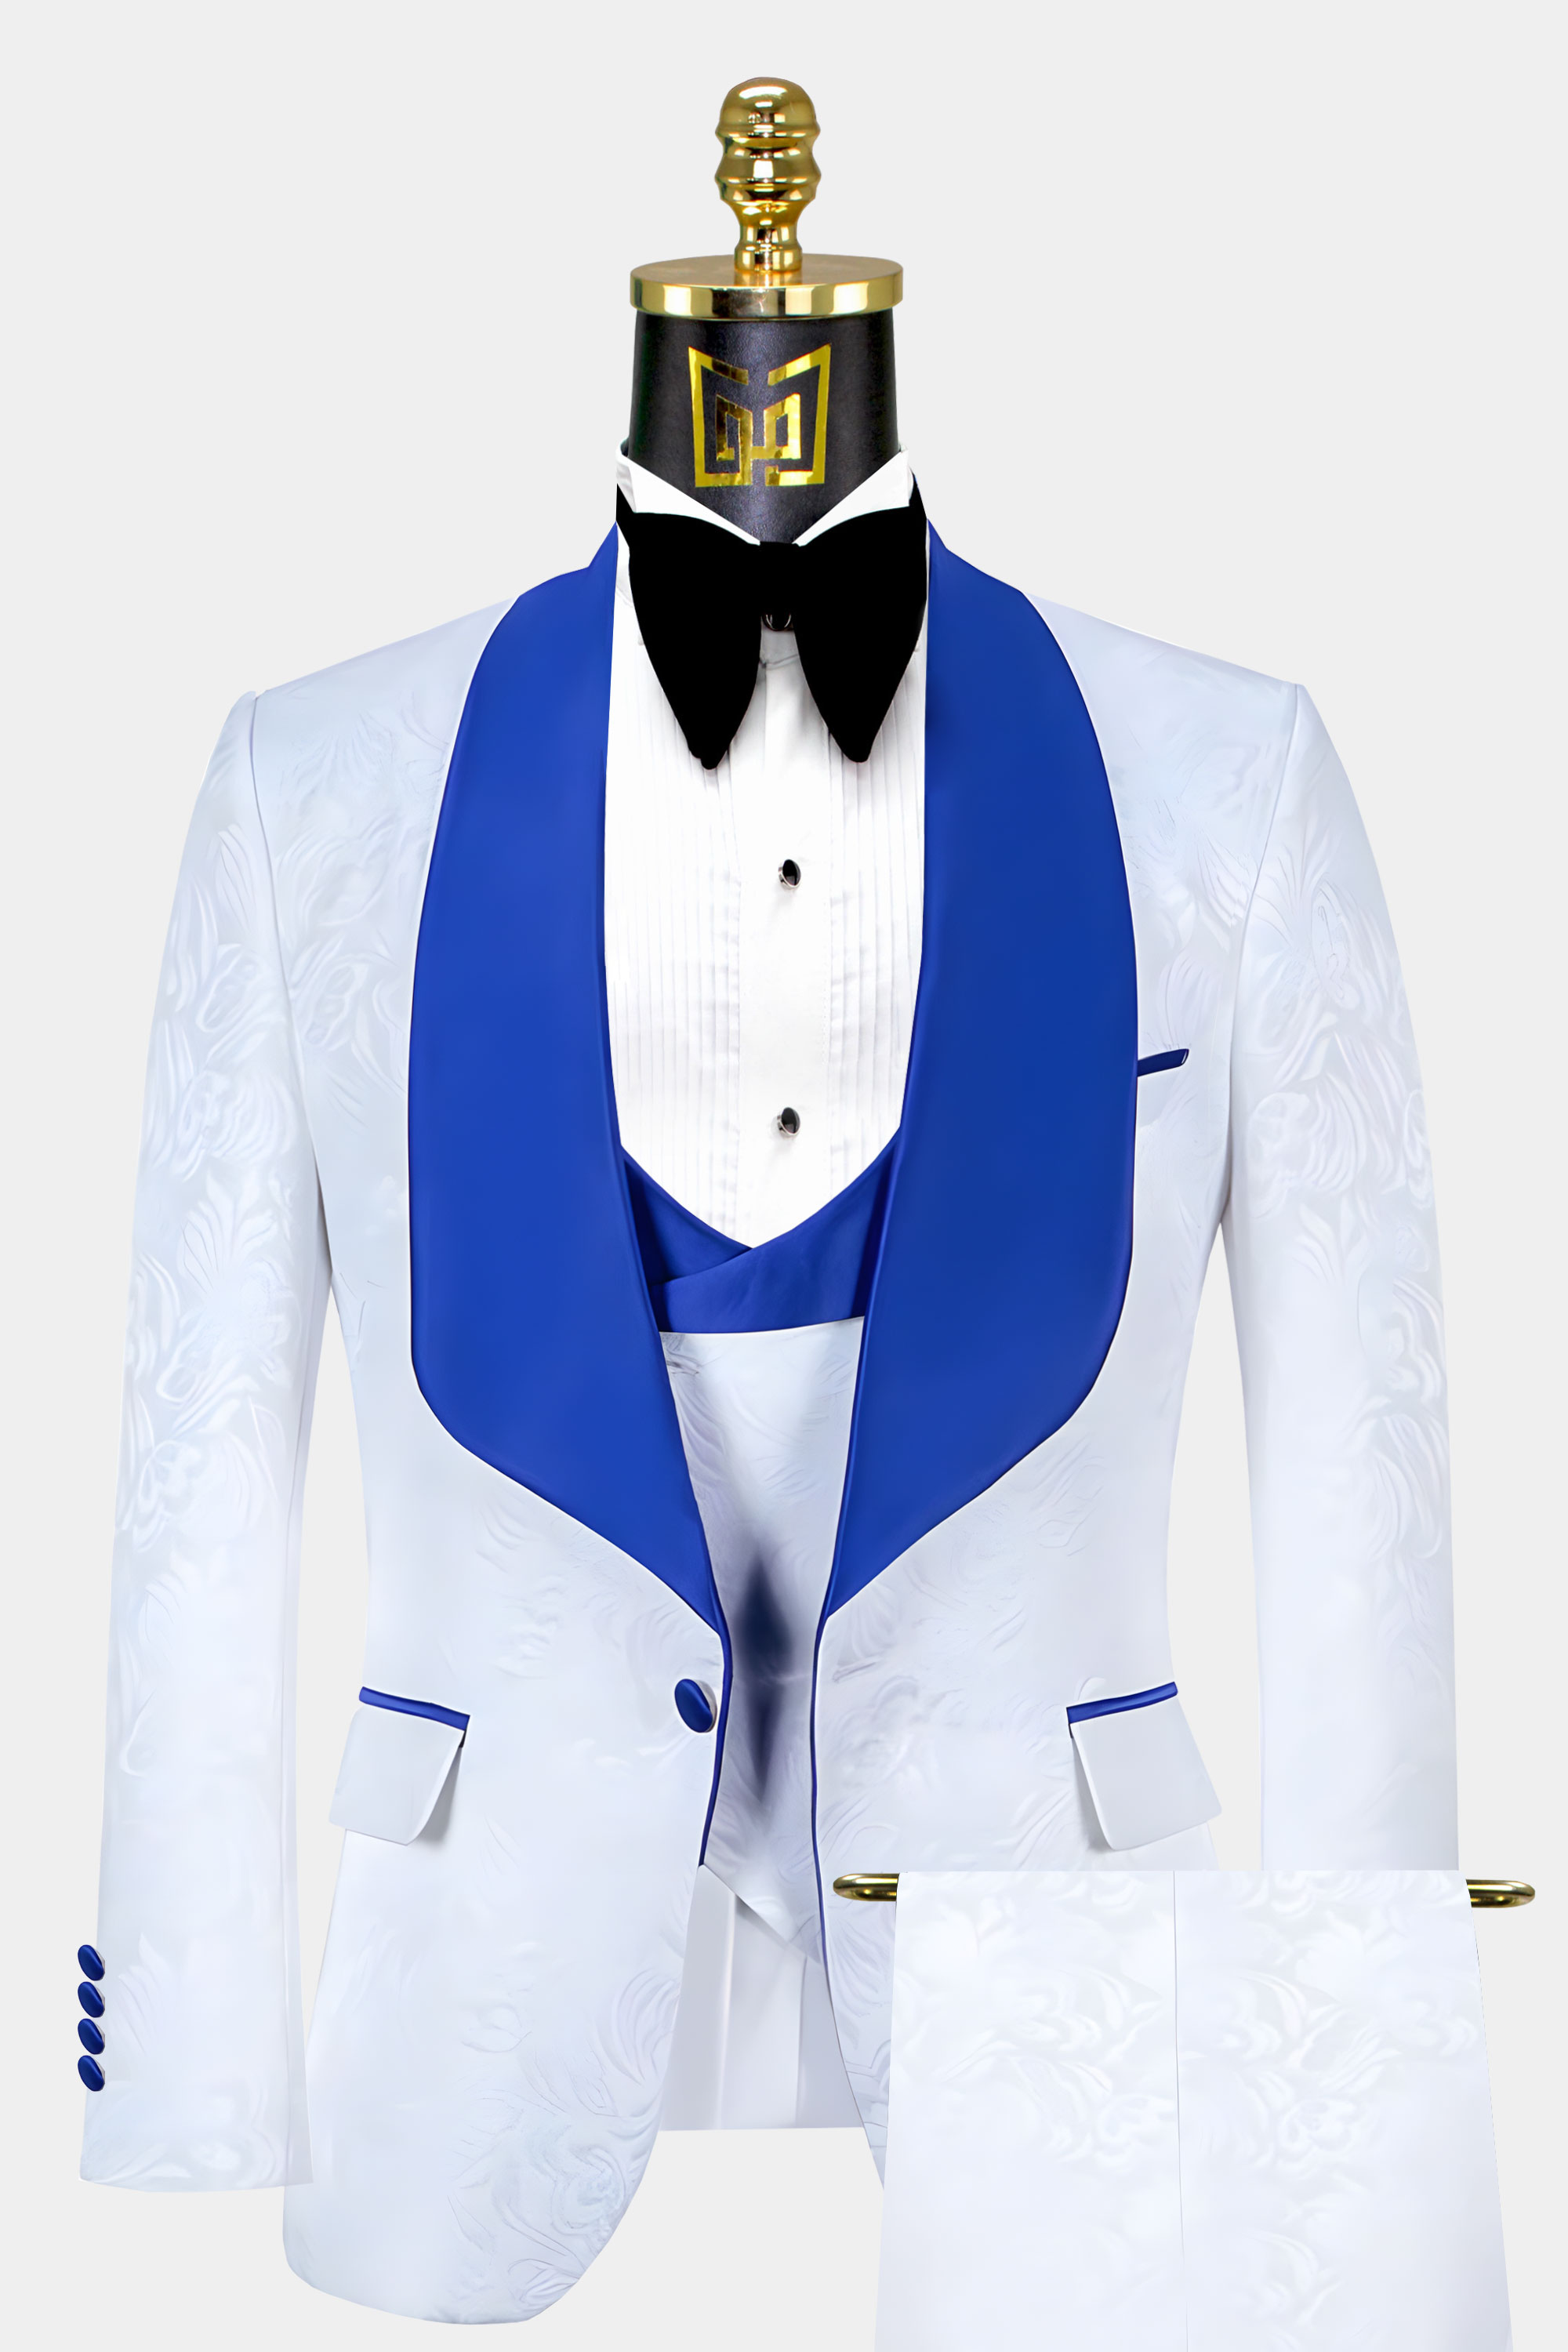 Mens-White-and-Blue-Tuxedo-Wedding-Groom-Prom-Suit-from-Gentlemansguru.com